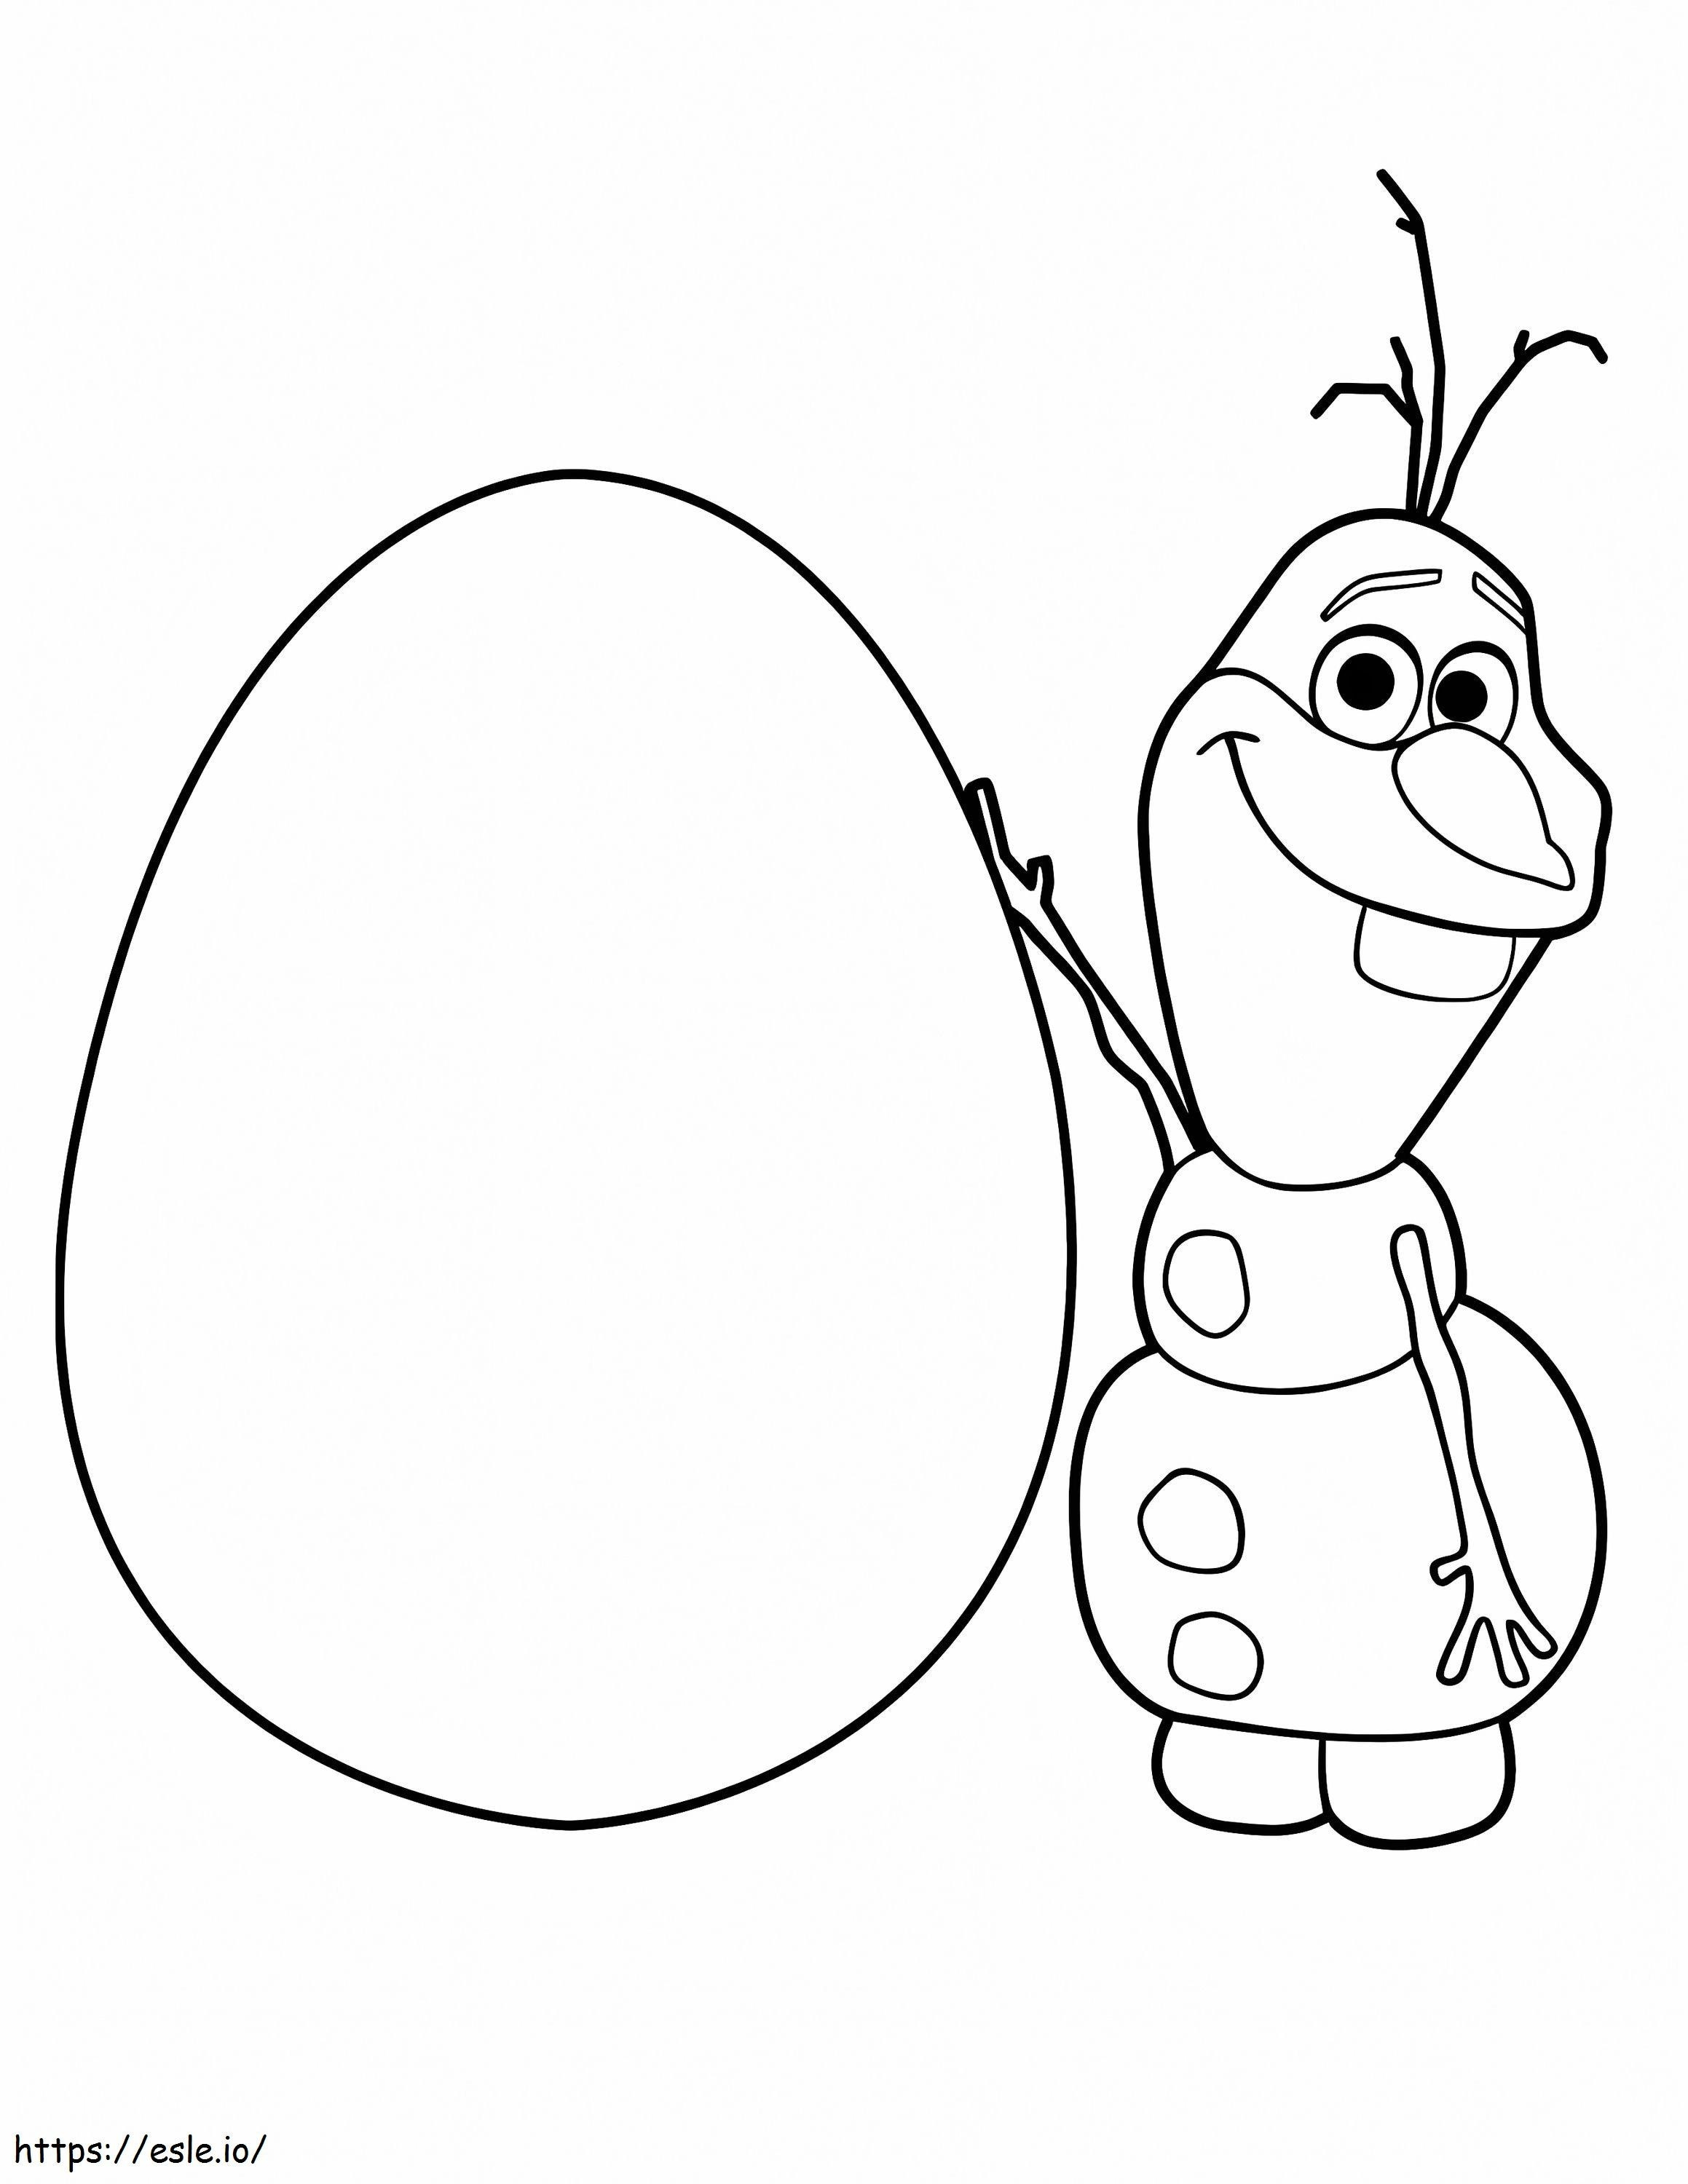 Olaf dan Telur Gambar Mewarnai